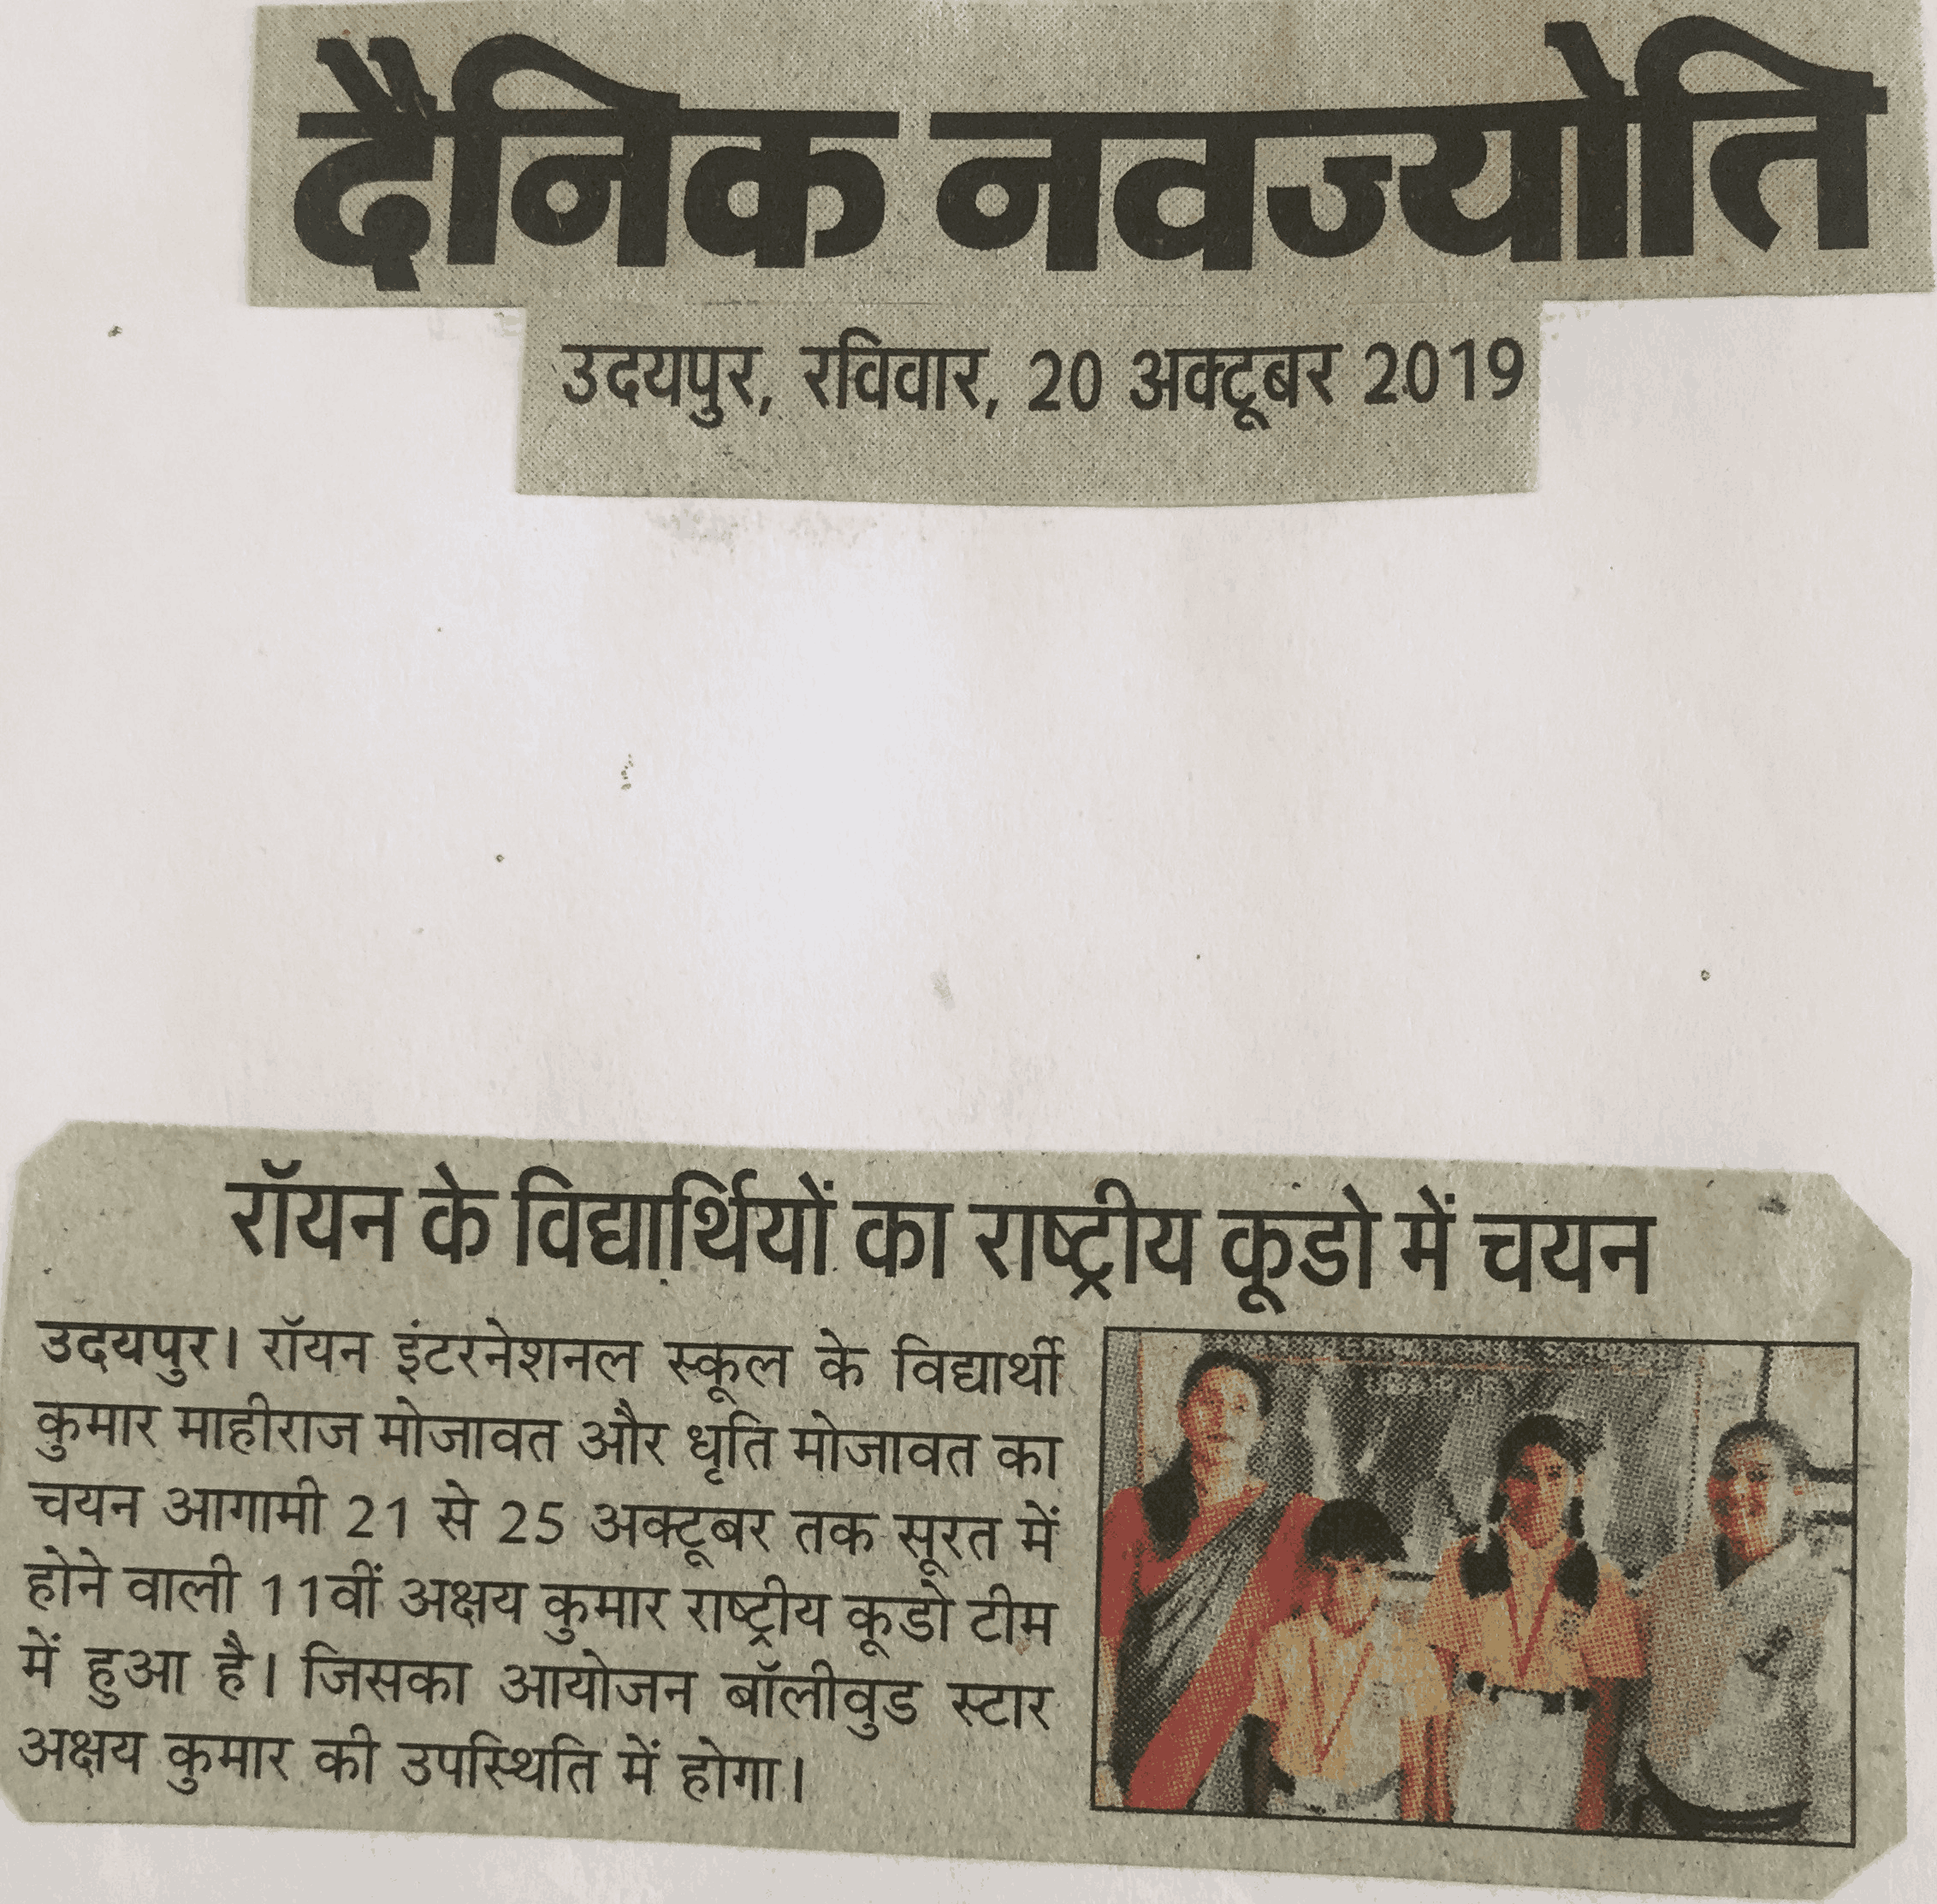 RYANITES SELECTED IN NATIONAL KUDO CHAMPIONSHIP - Ryan international School, Udaipur